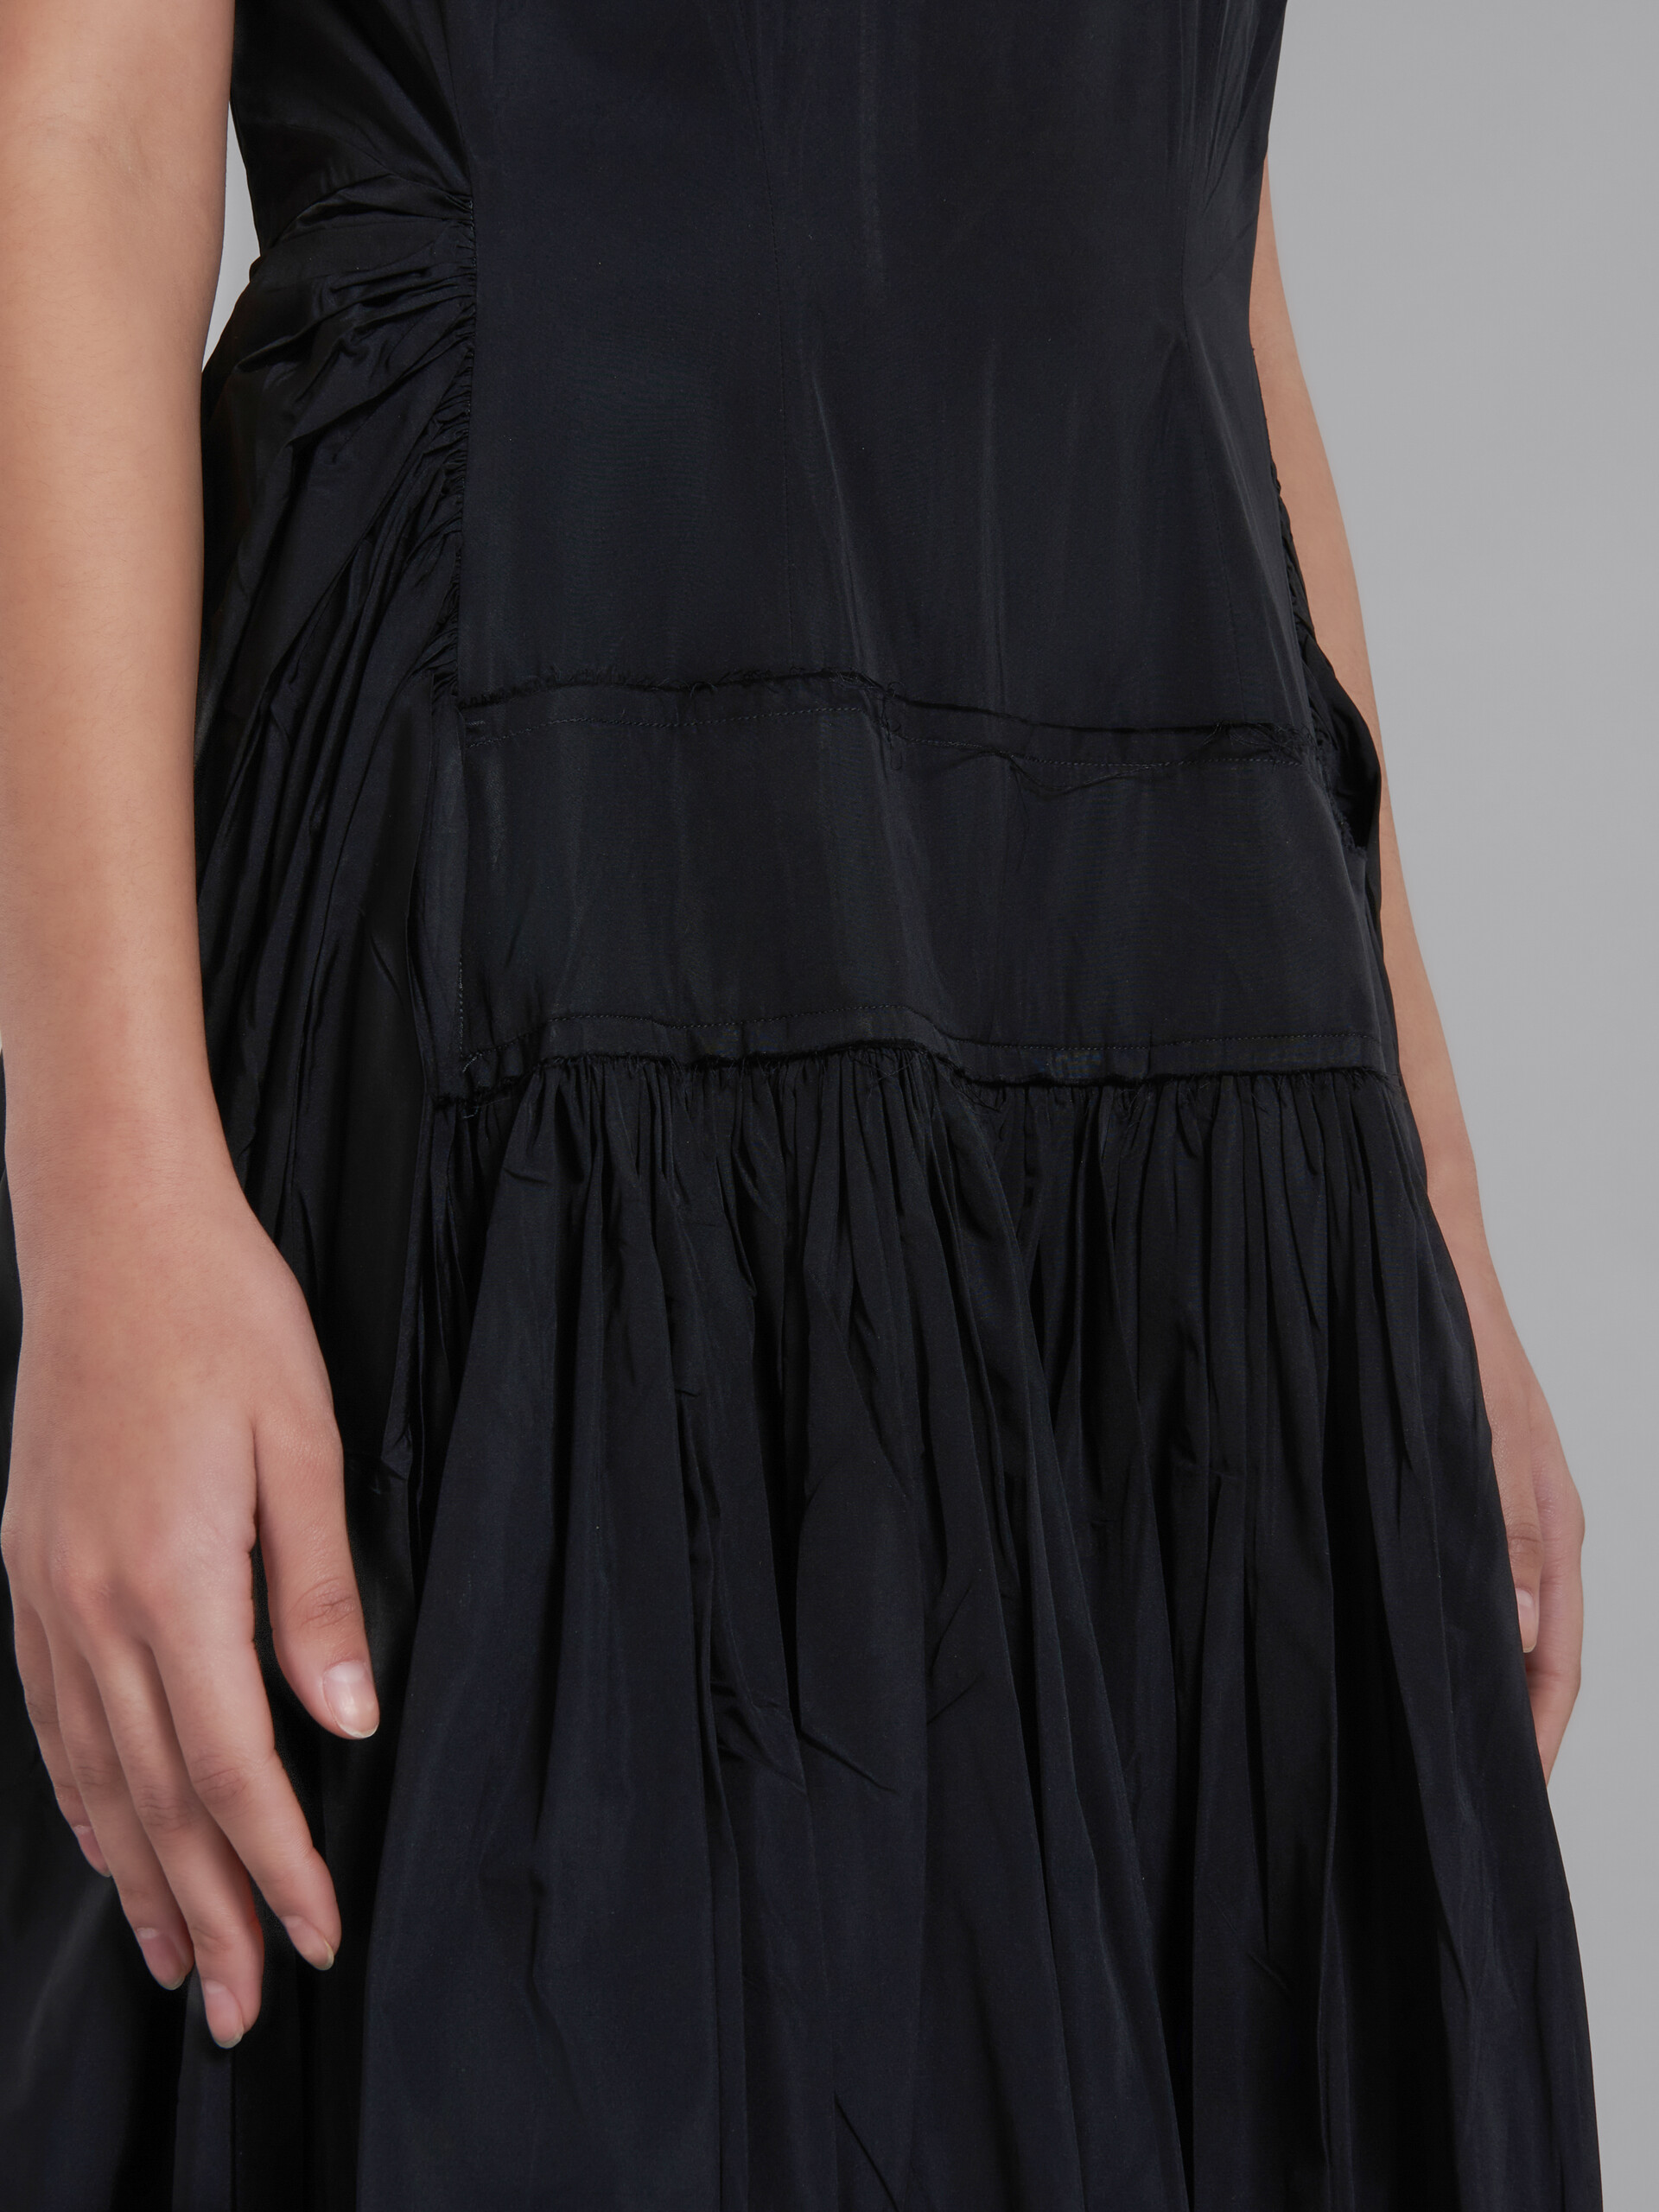 Black taffeta dress with apron front - Dresses - Image 5